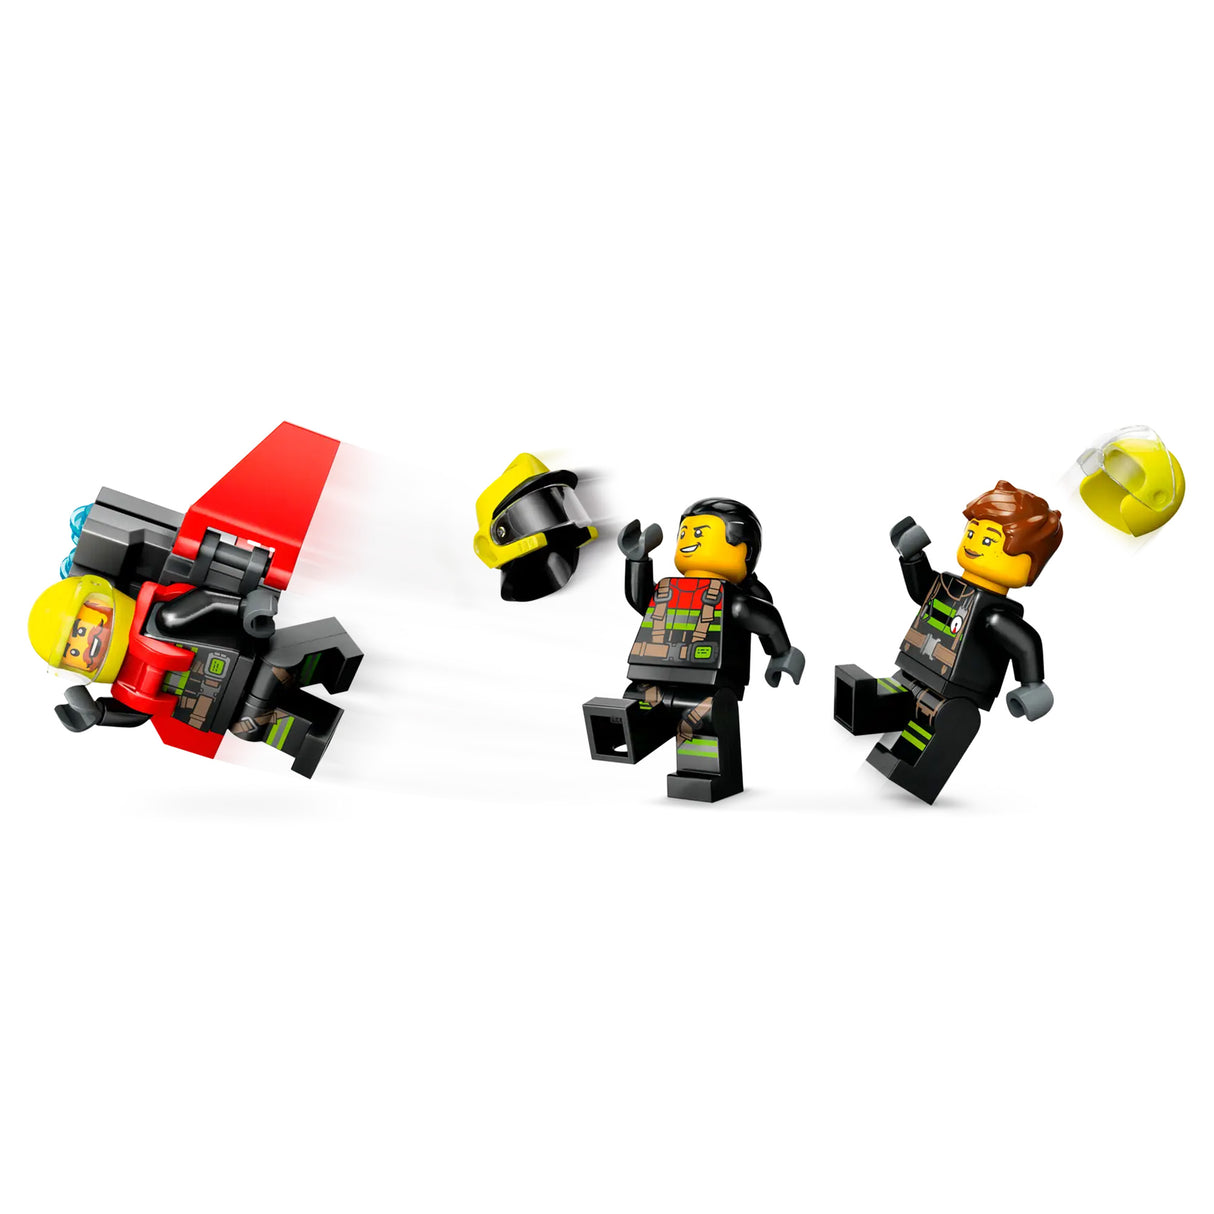 LEGO City Fire Rescue Plane 60413, (478-pieces)